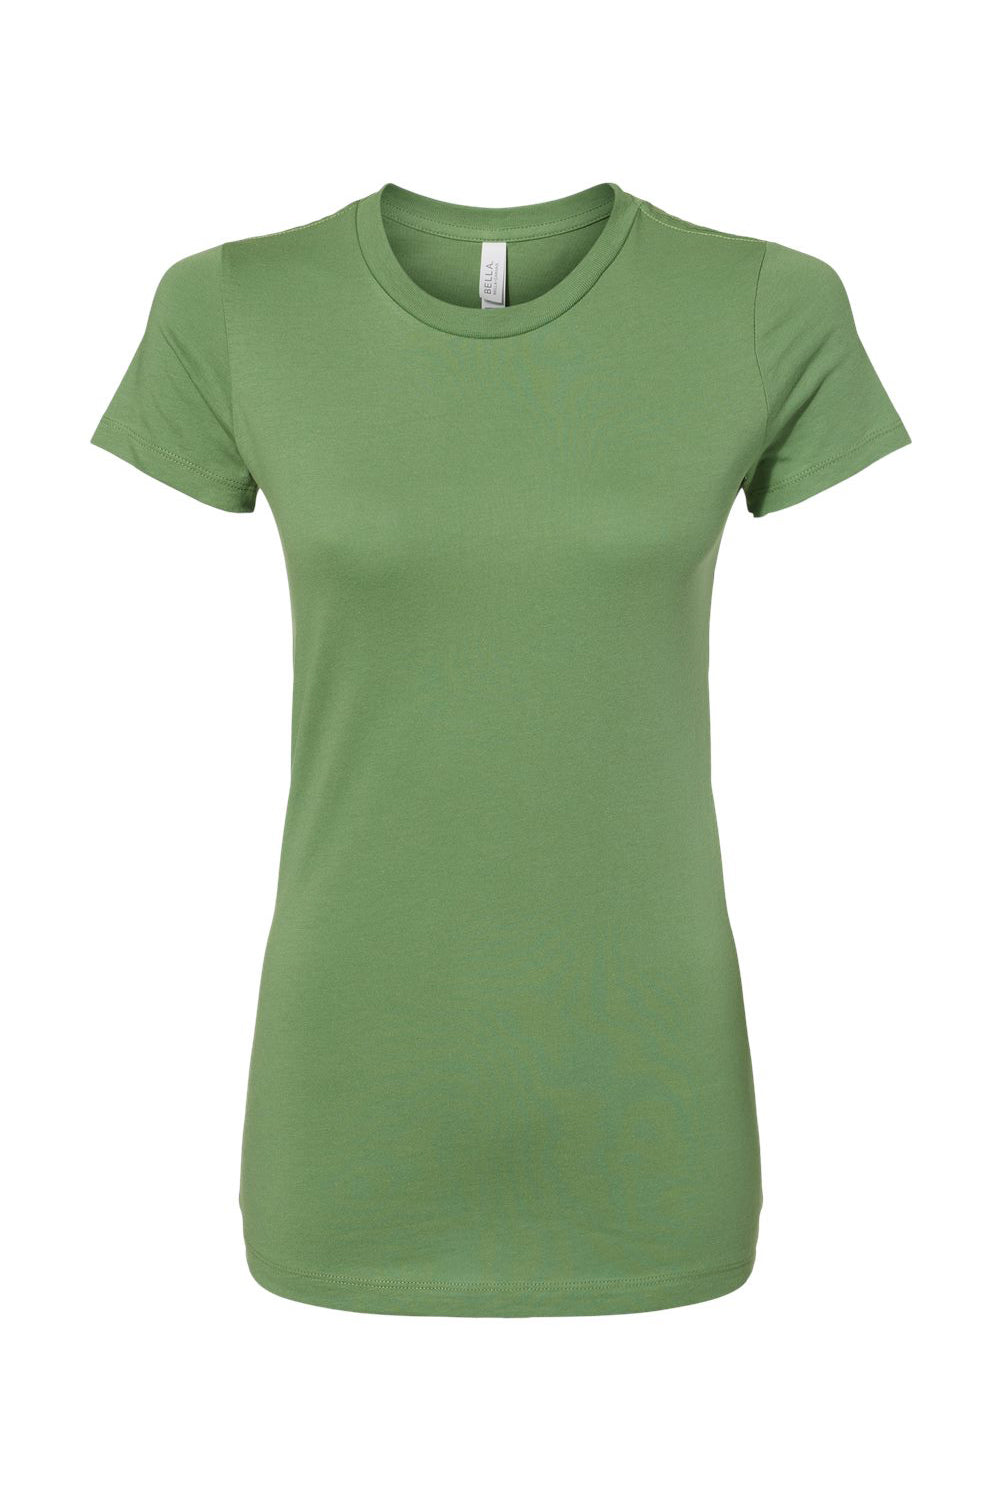 Bella + Canvas BC6004/6004 Womens The Favorite Short Sleeve Crewneck T-Shirt Leaf Green Flat Front